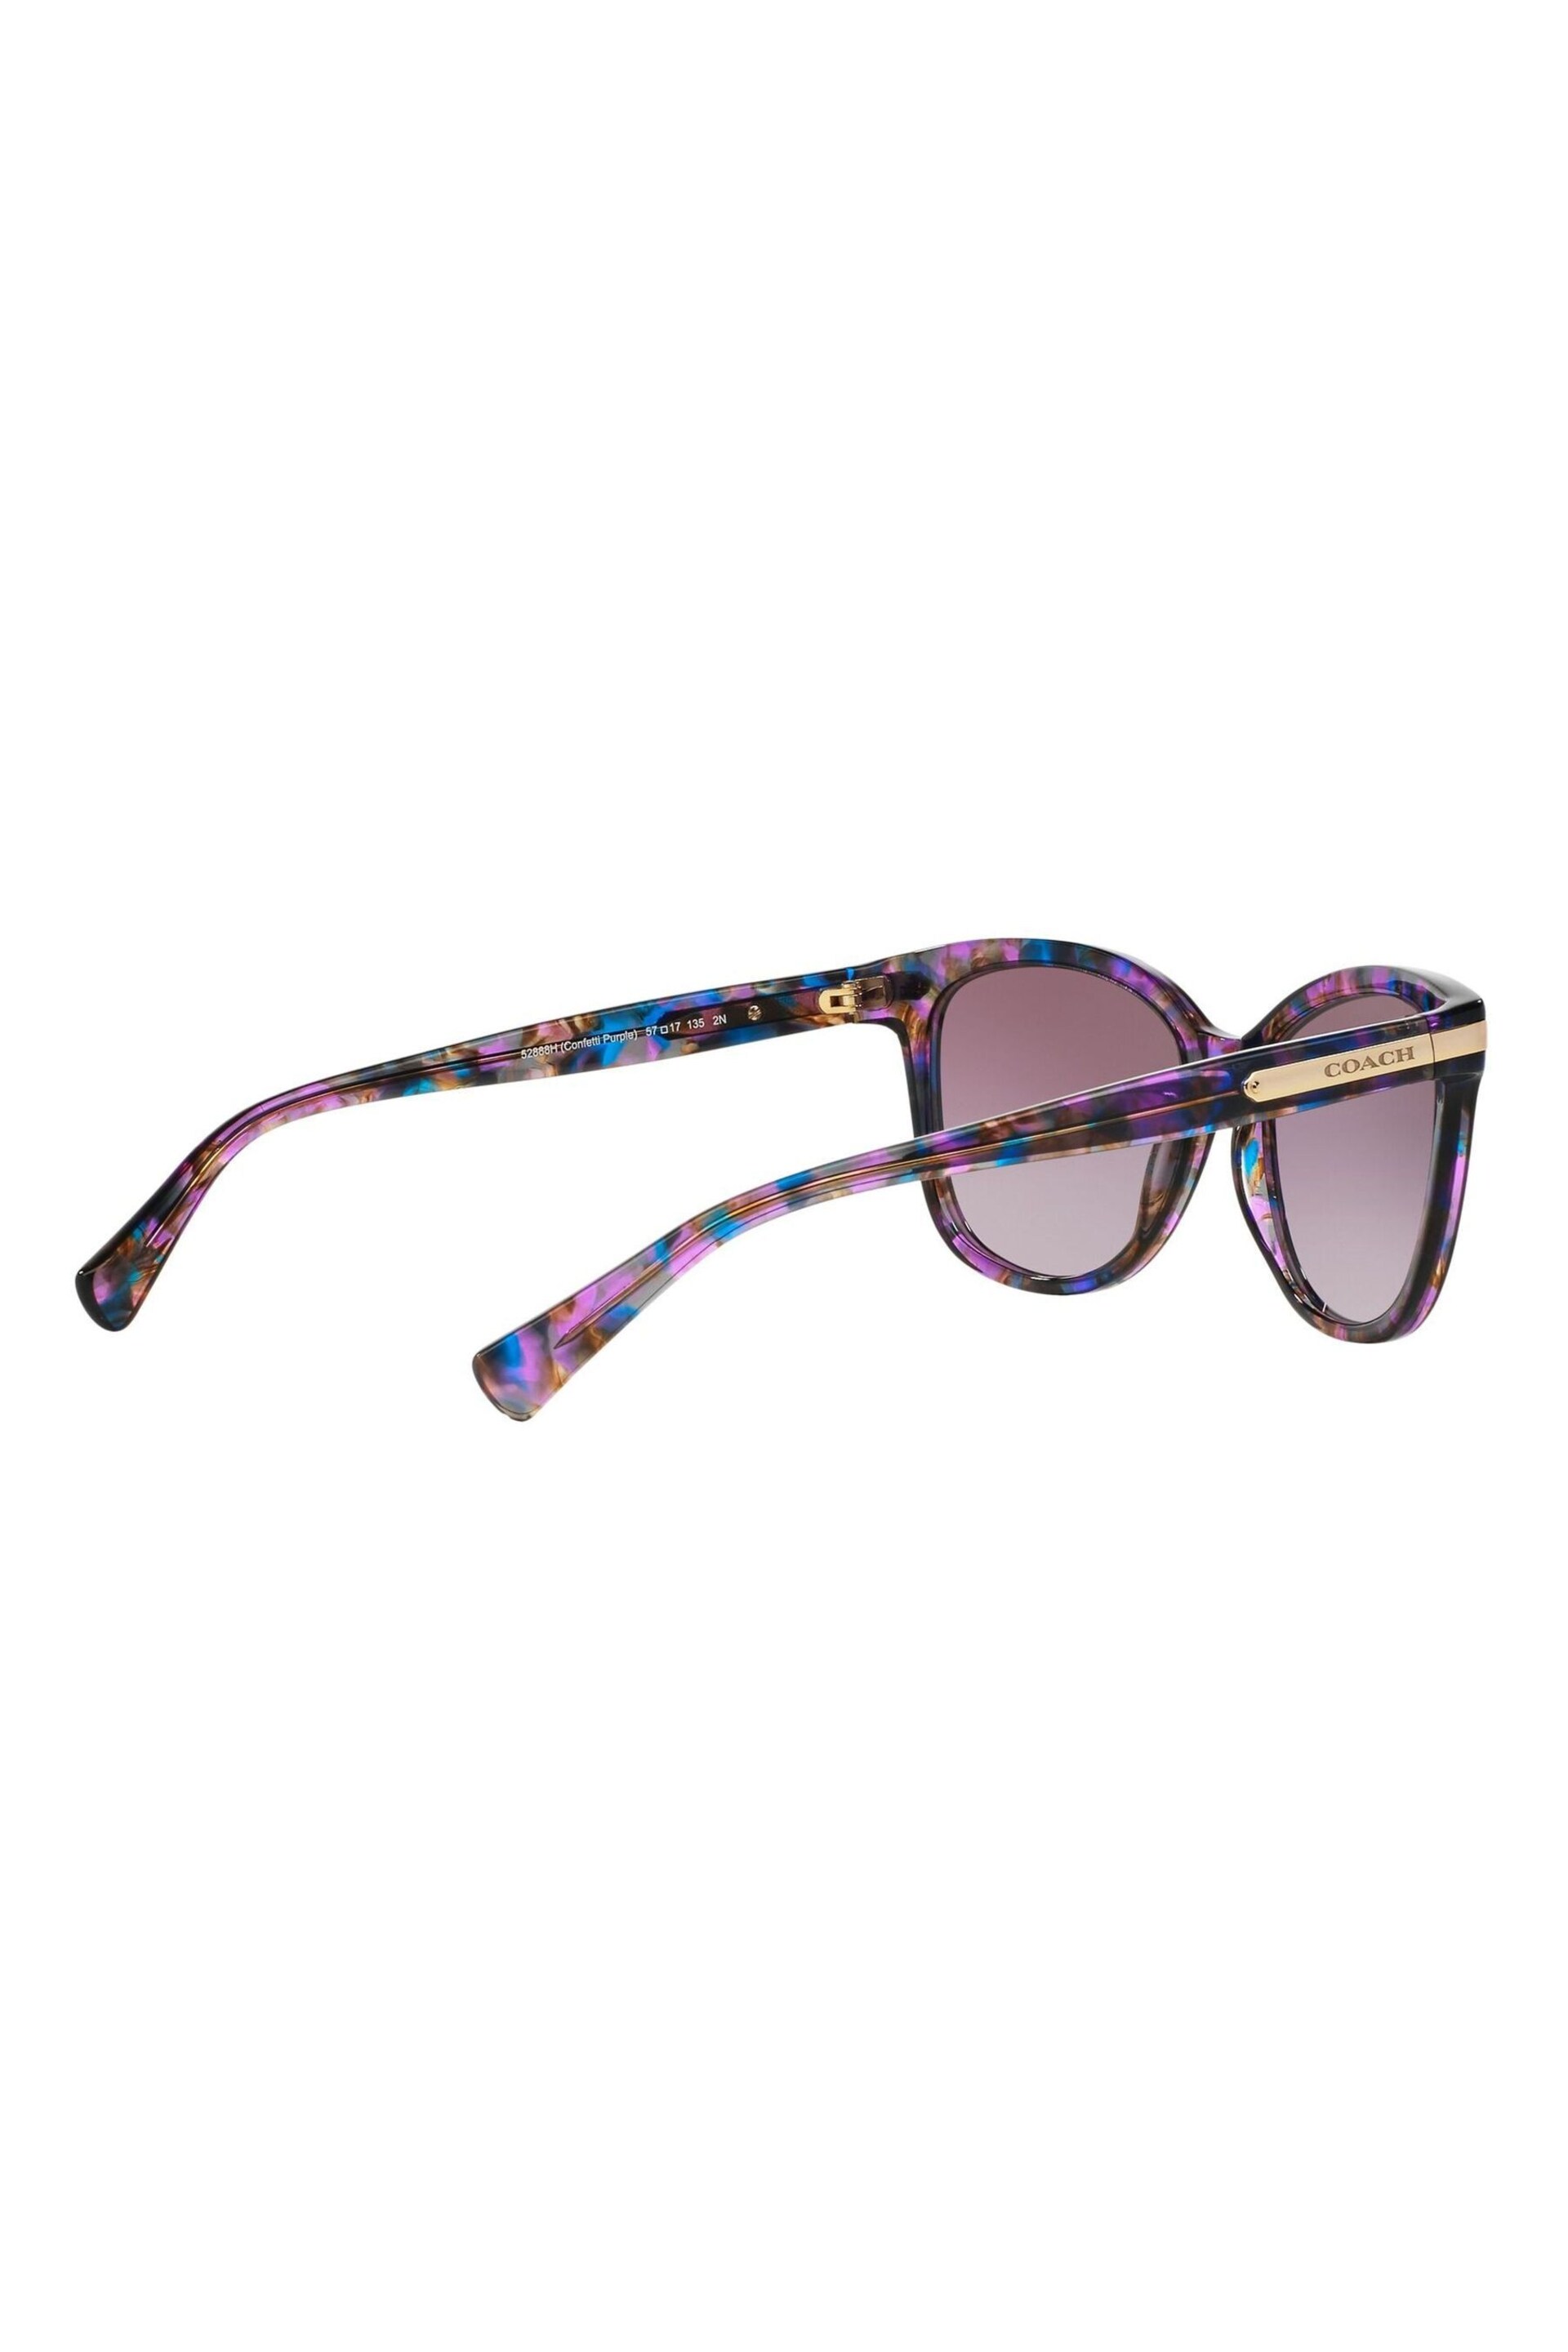 COACH Purple Sunglasses - Image 9 of 12